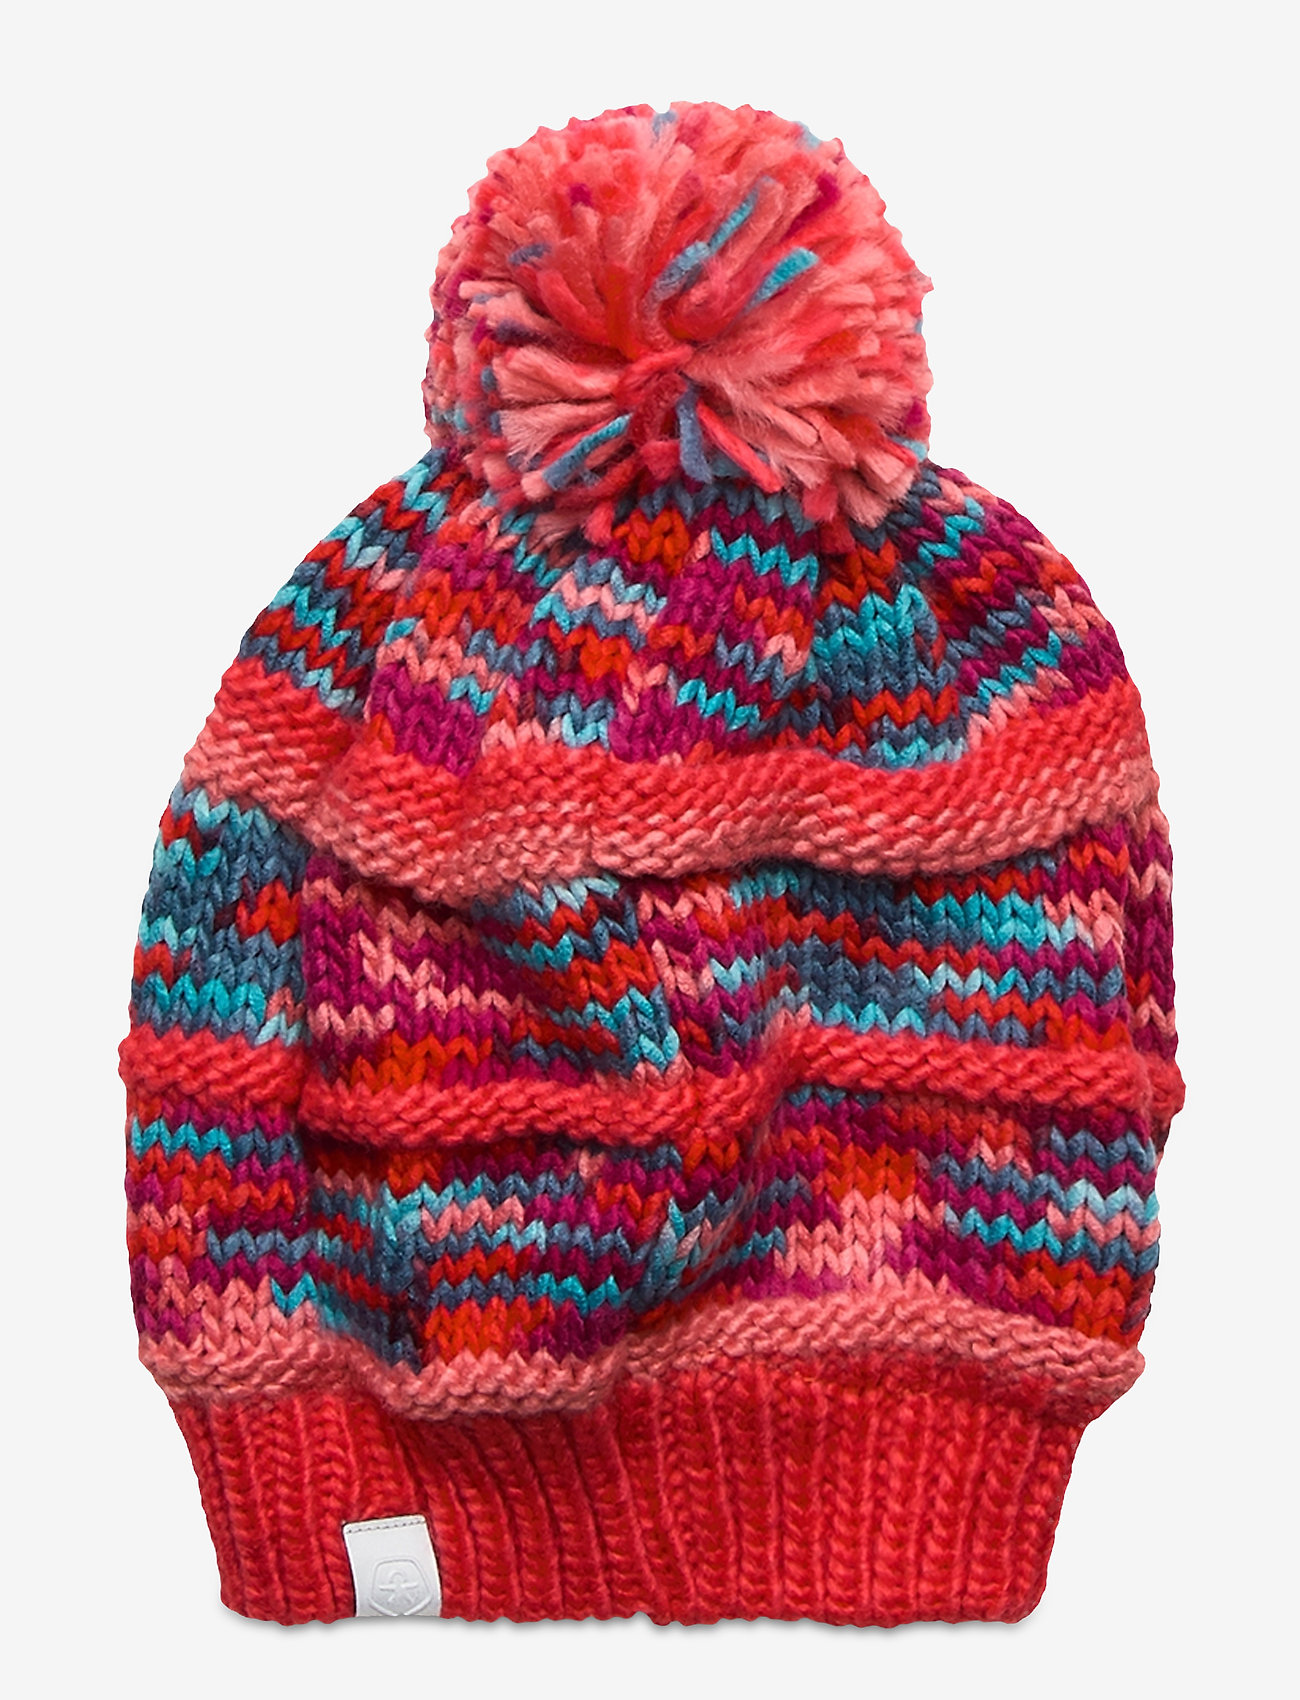 Color Kids - hat - die niedrigsten preise - coral red - 1